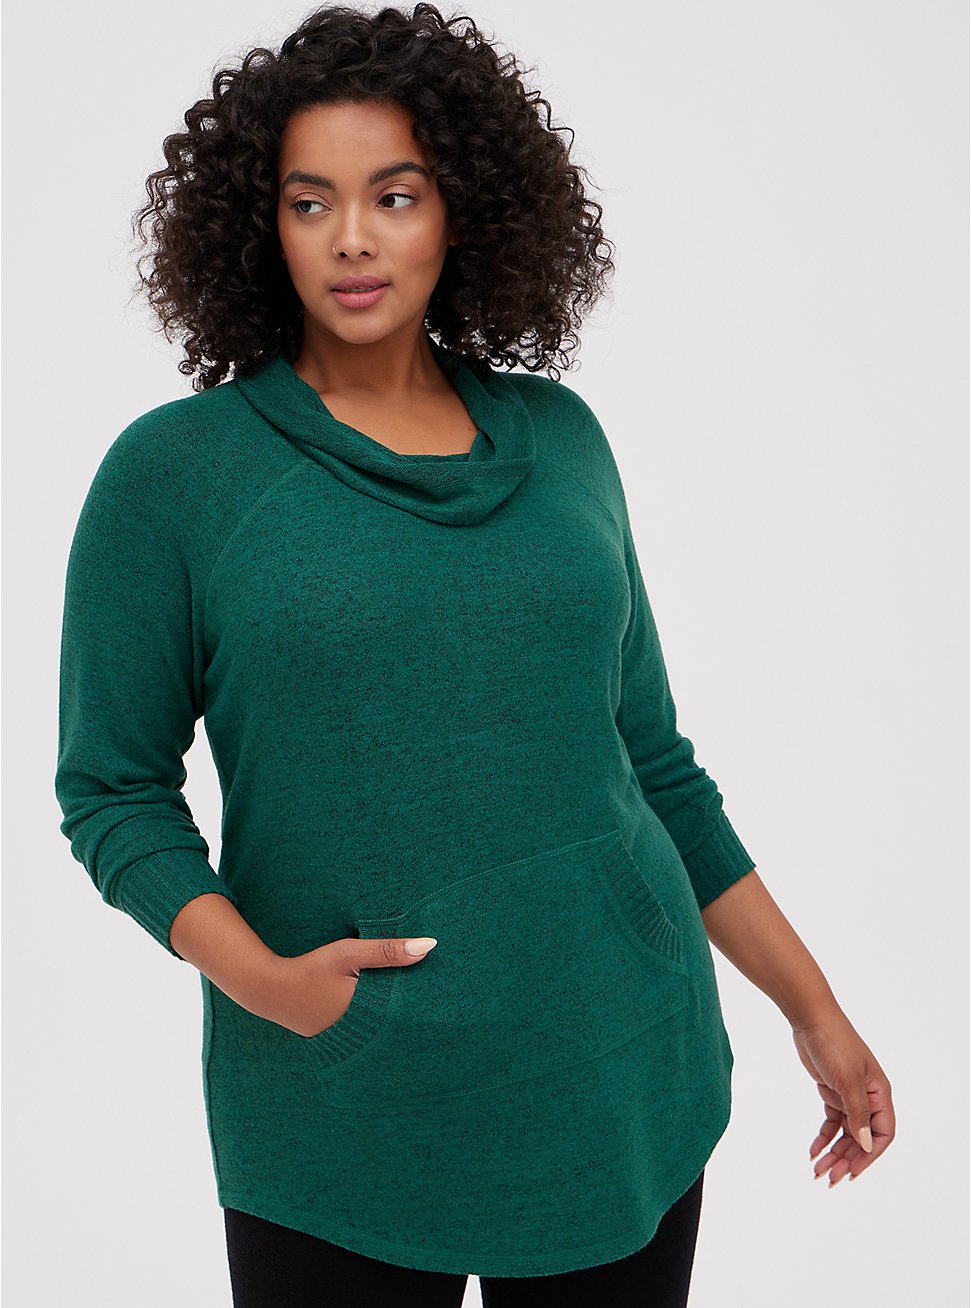 Plus Size Tunic Sweatshirt - Super Soft Cowl Neck Green, GREEN, hi-res